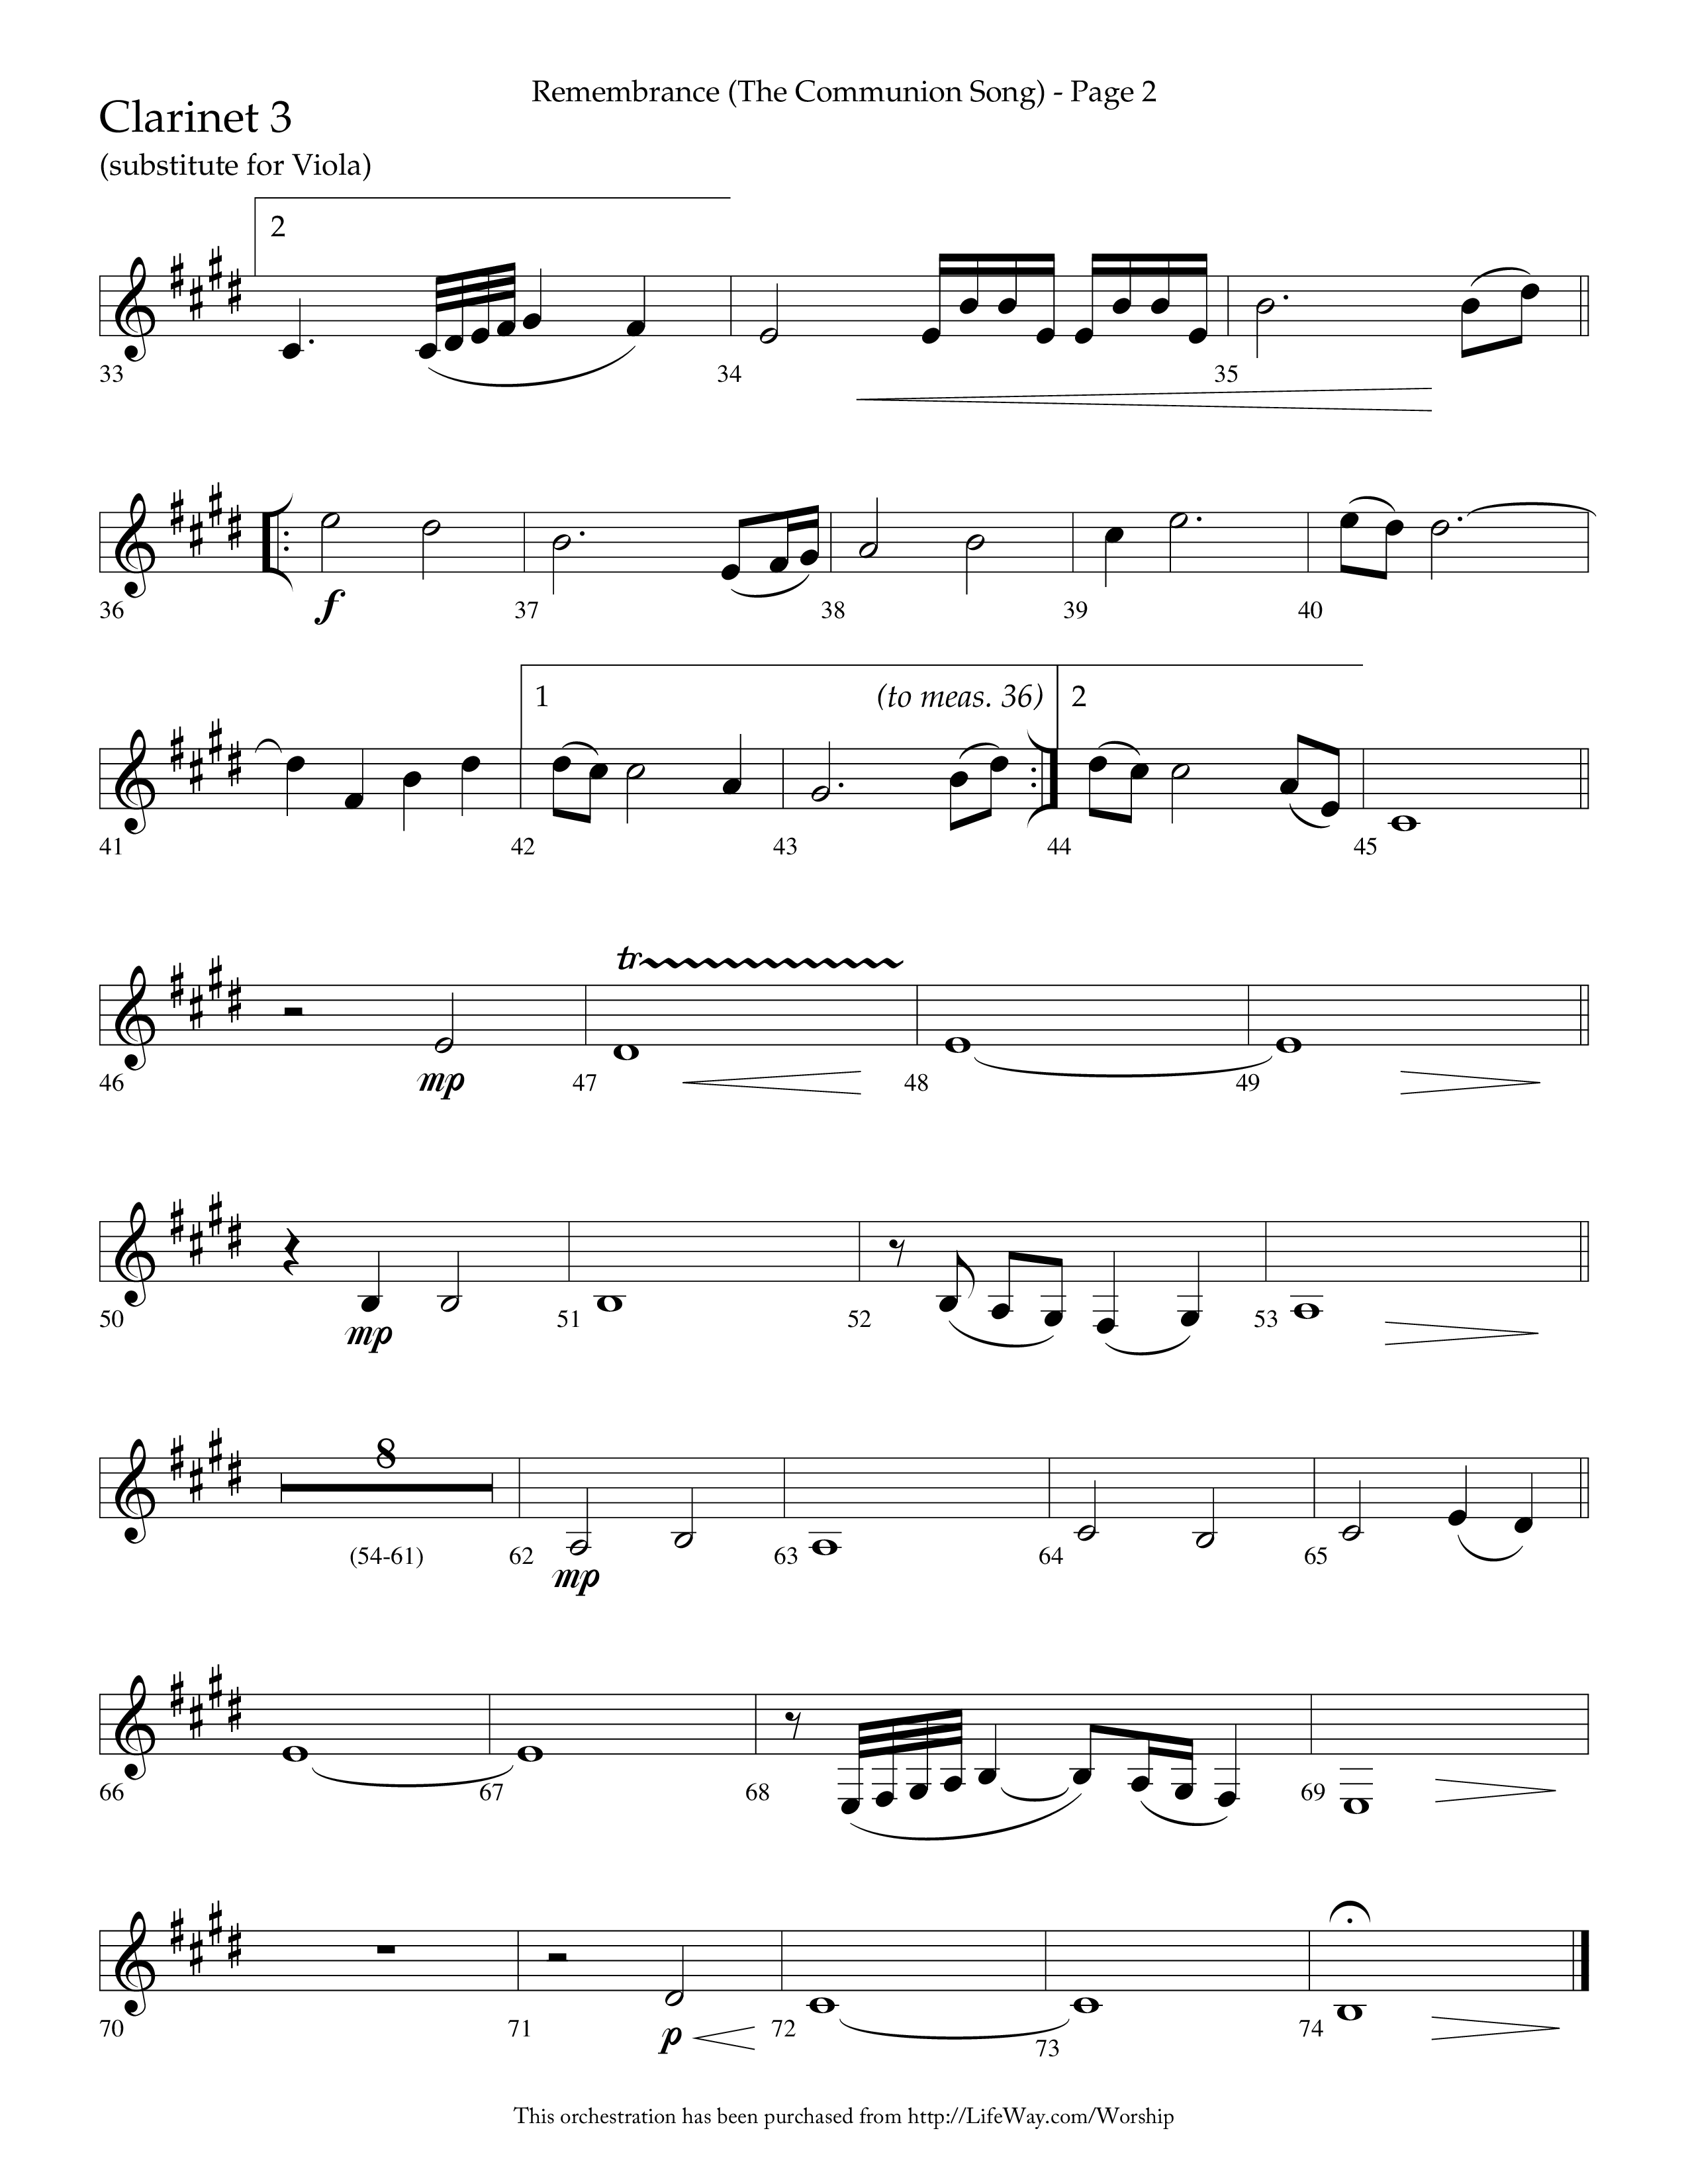 Remembrance (Choral Anthem SATB) Clarinet 3 (Lifeway Choral / Arr. Charlie Sinclair / Arr. Carol Tornquist / Orch. Danny Zaloudik)